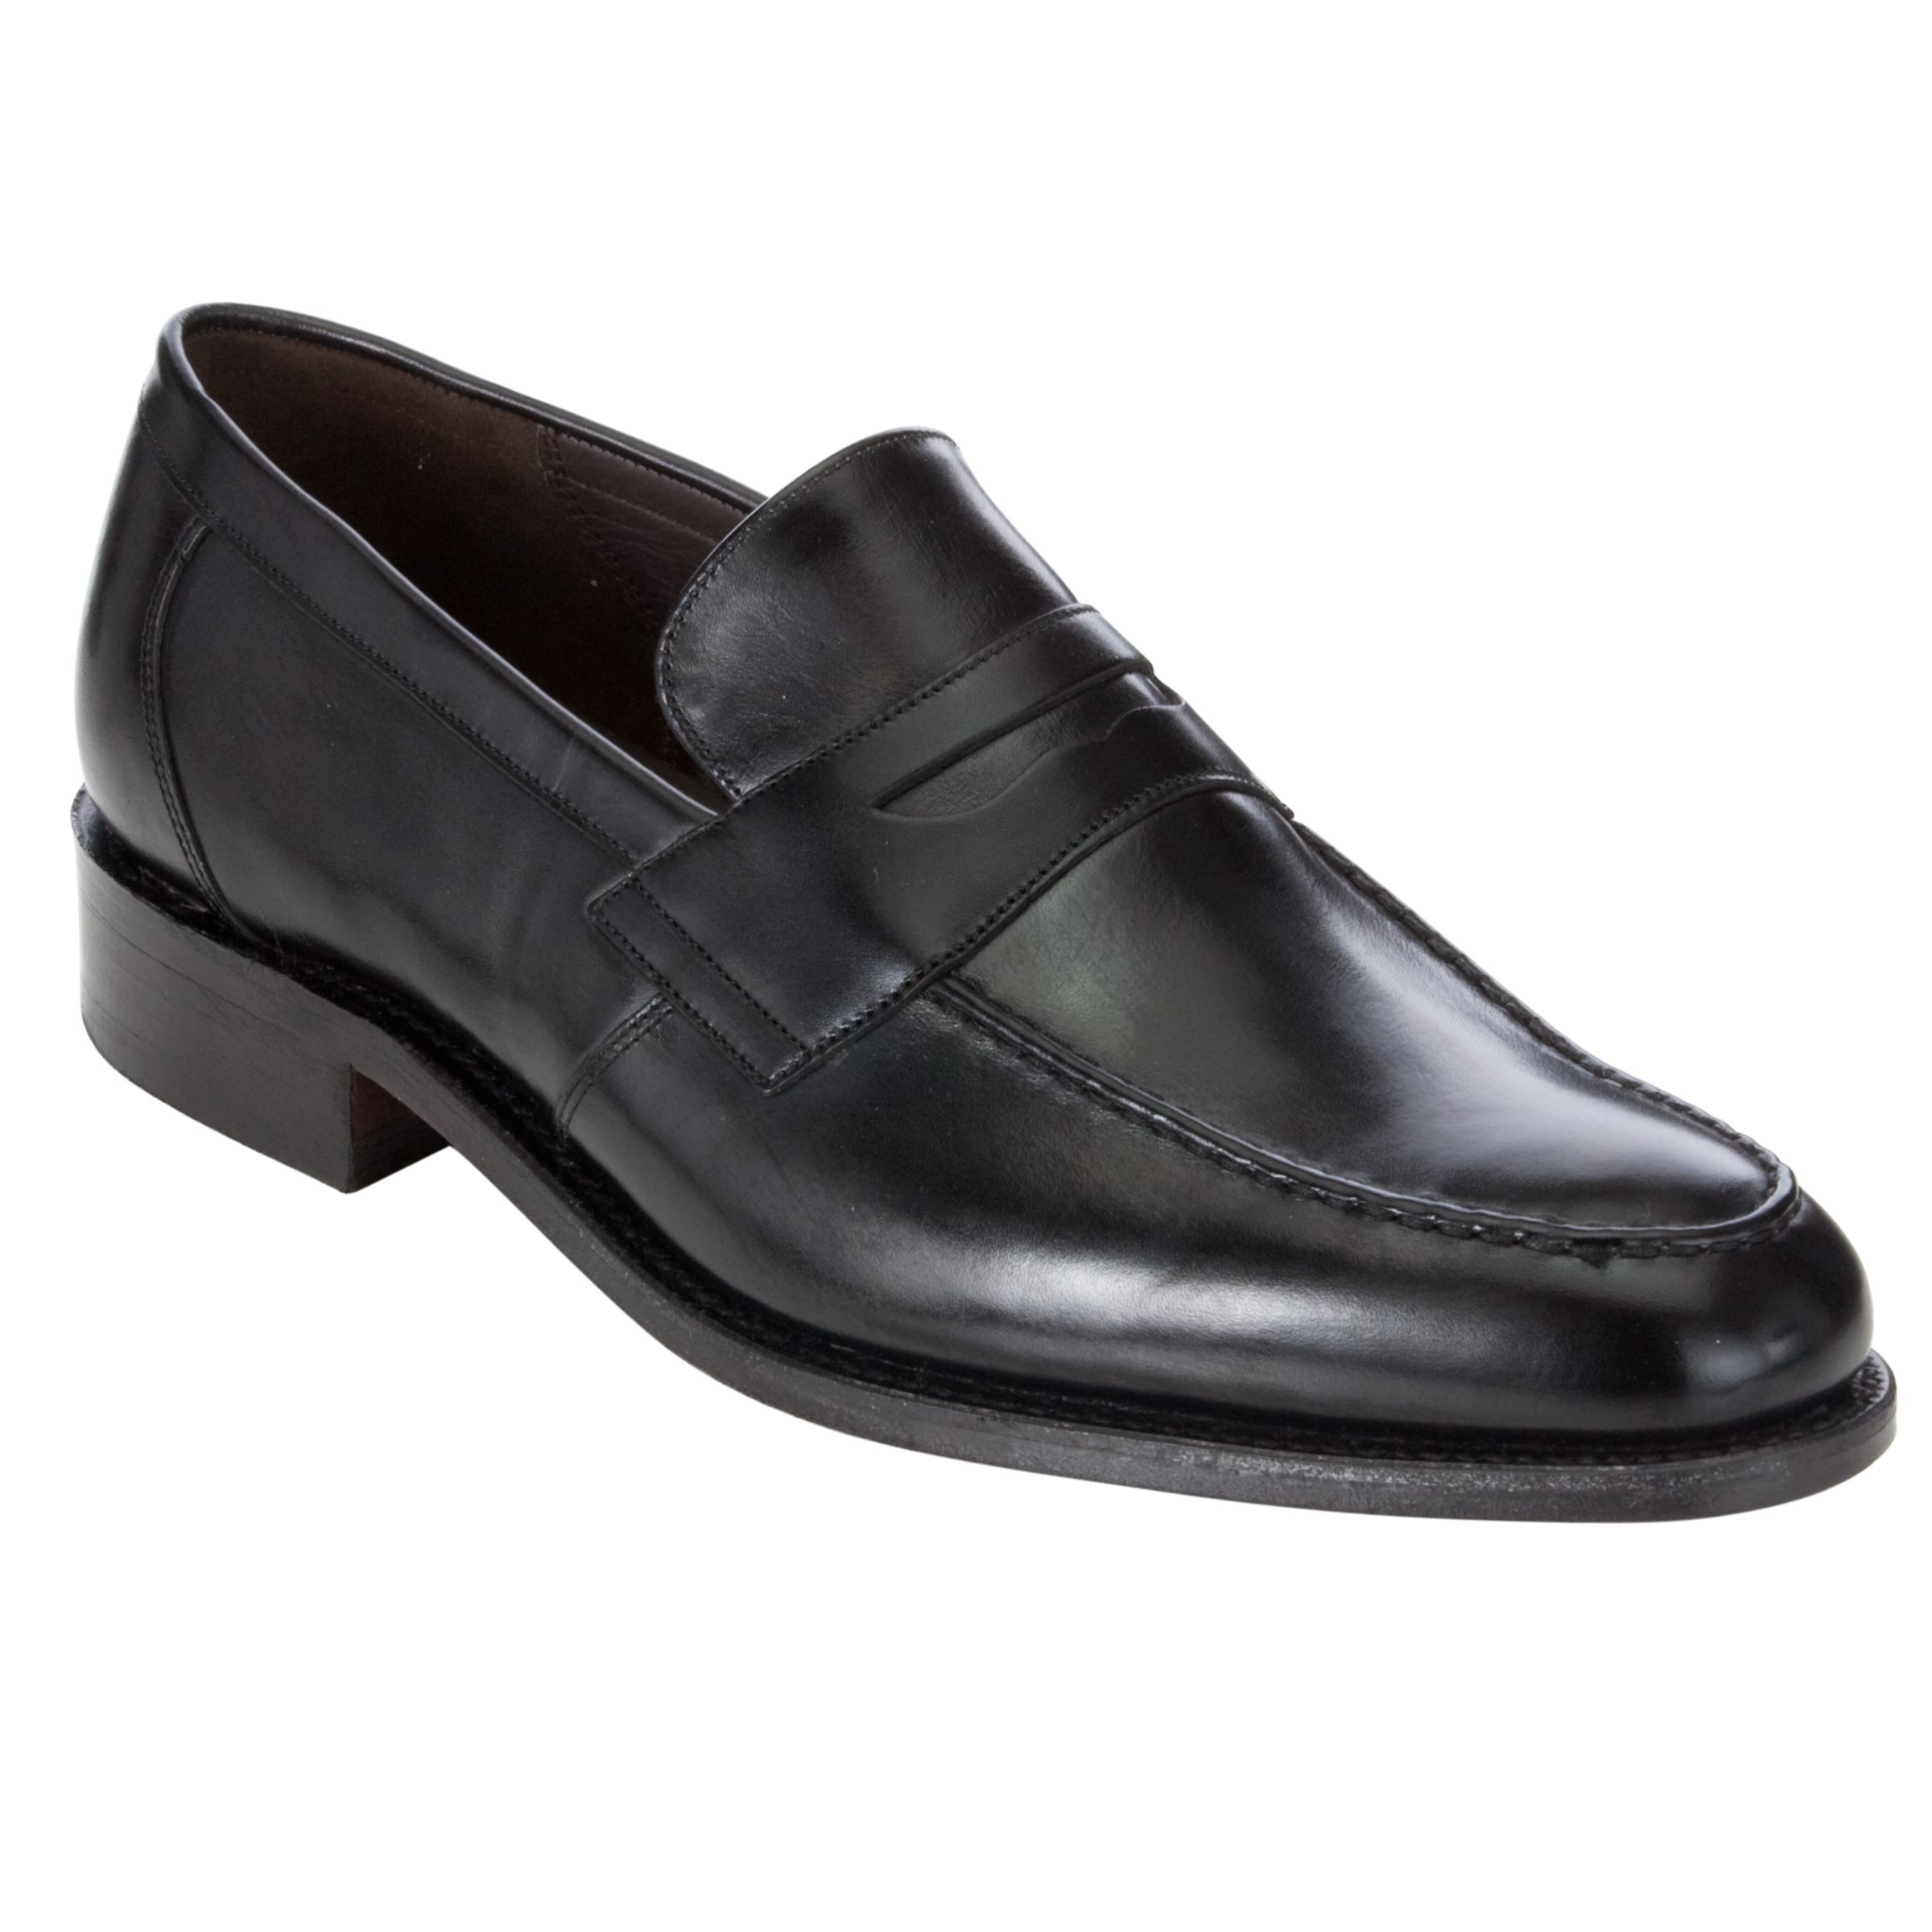 Barkers Warner Calf Leather Shoes, Black at John Lewis